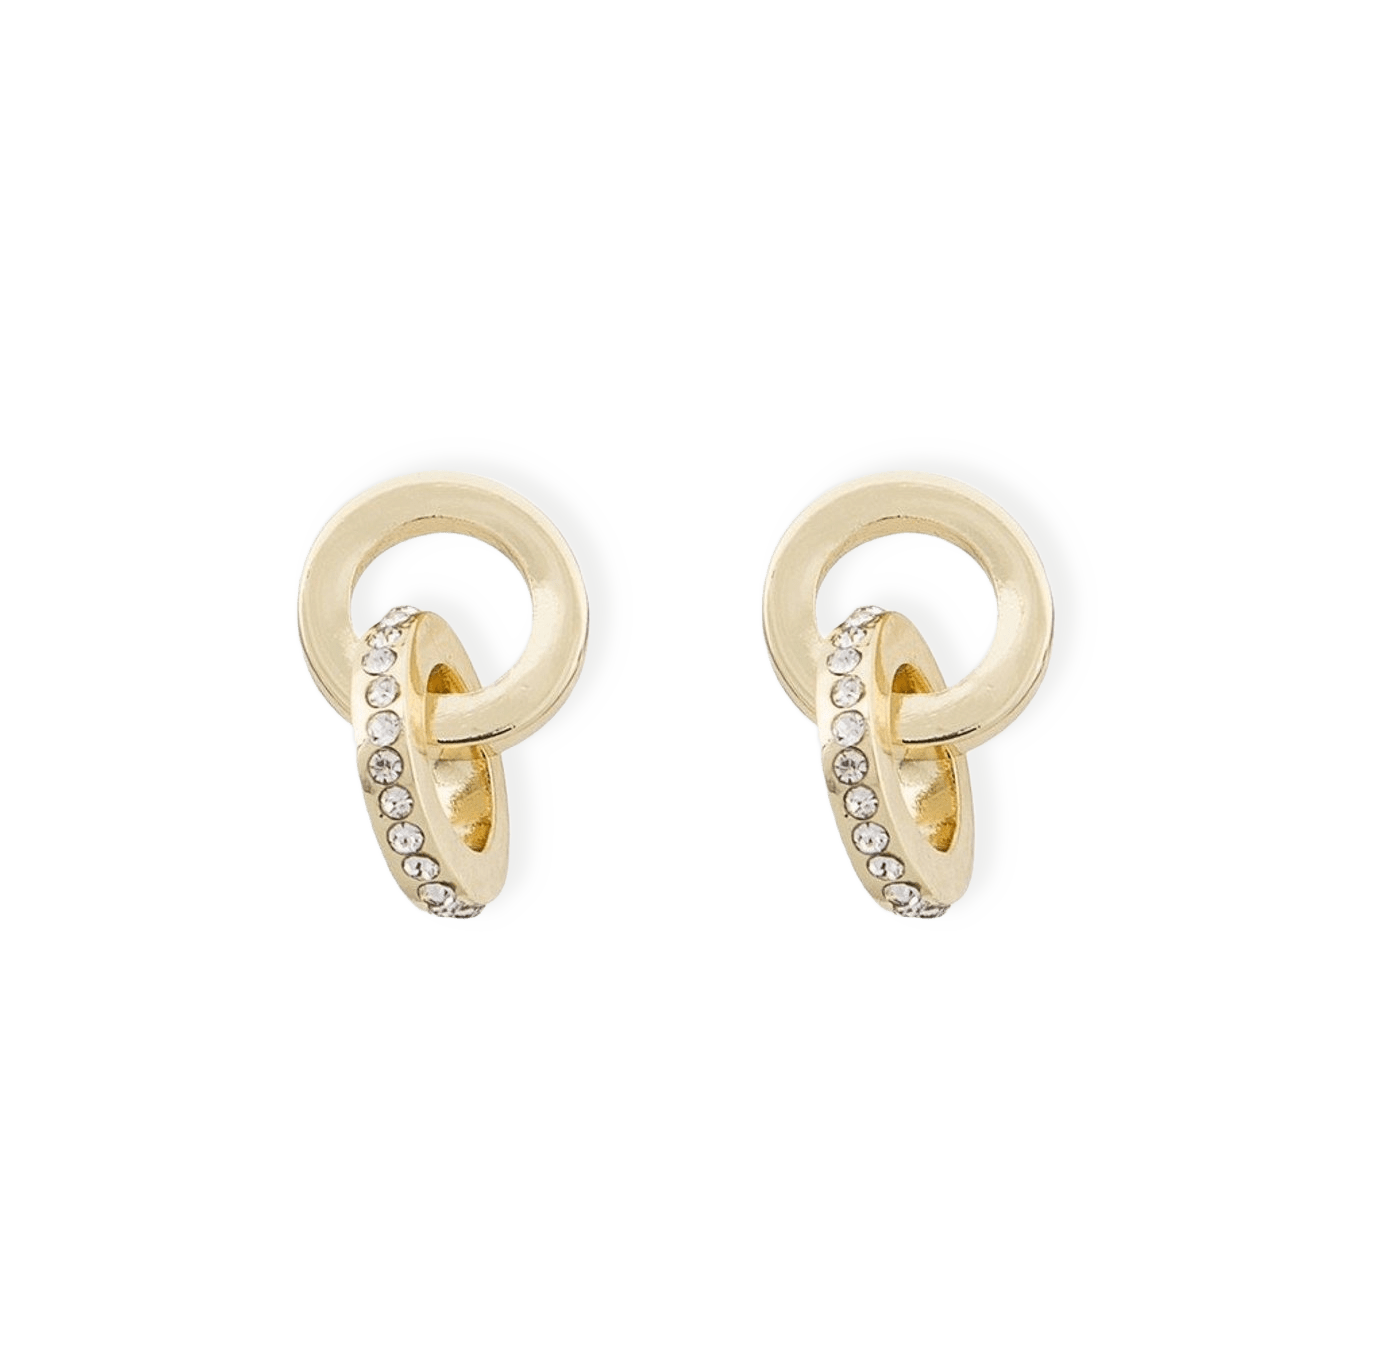 Connected Pendant Earring från SNÖ of Sweden